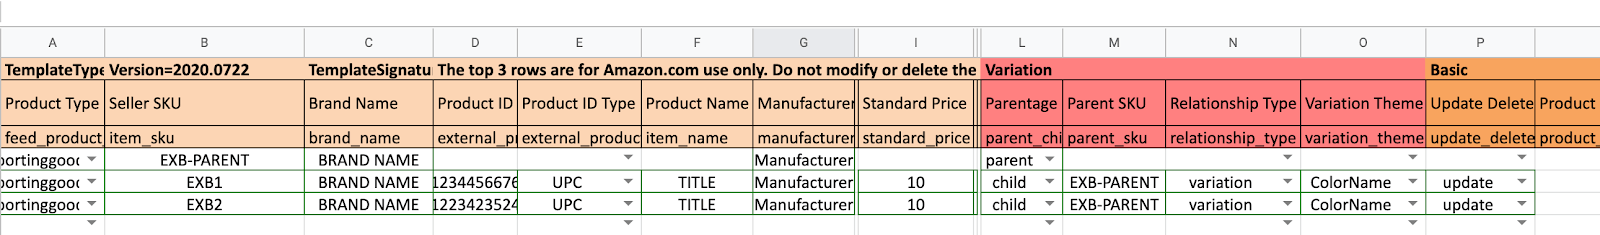 Amazon product listing variations: spreadsheet